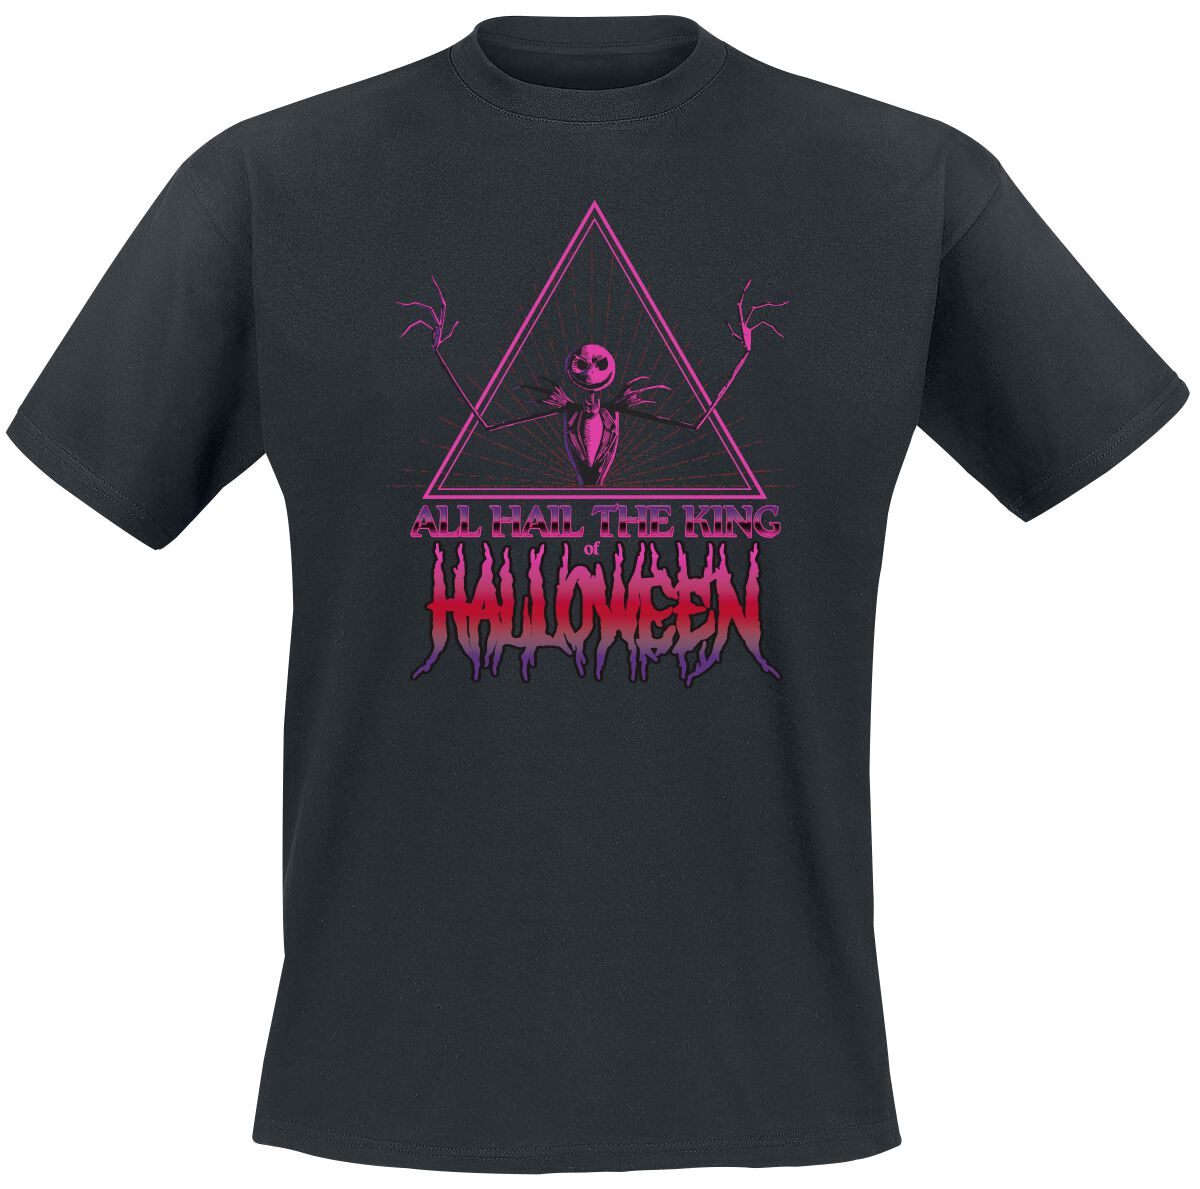 The Nightmare Before Christmas Halloween King T-Shirt schwarz in XL